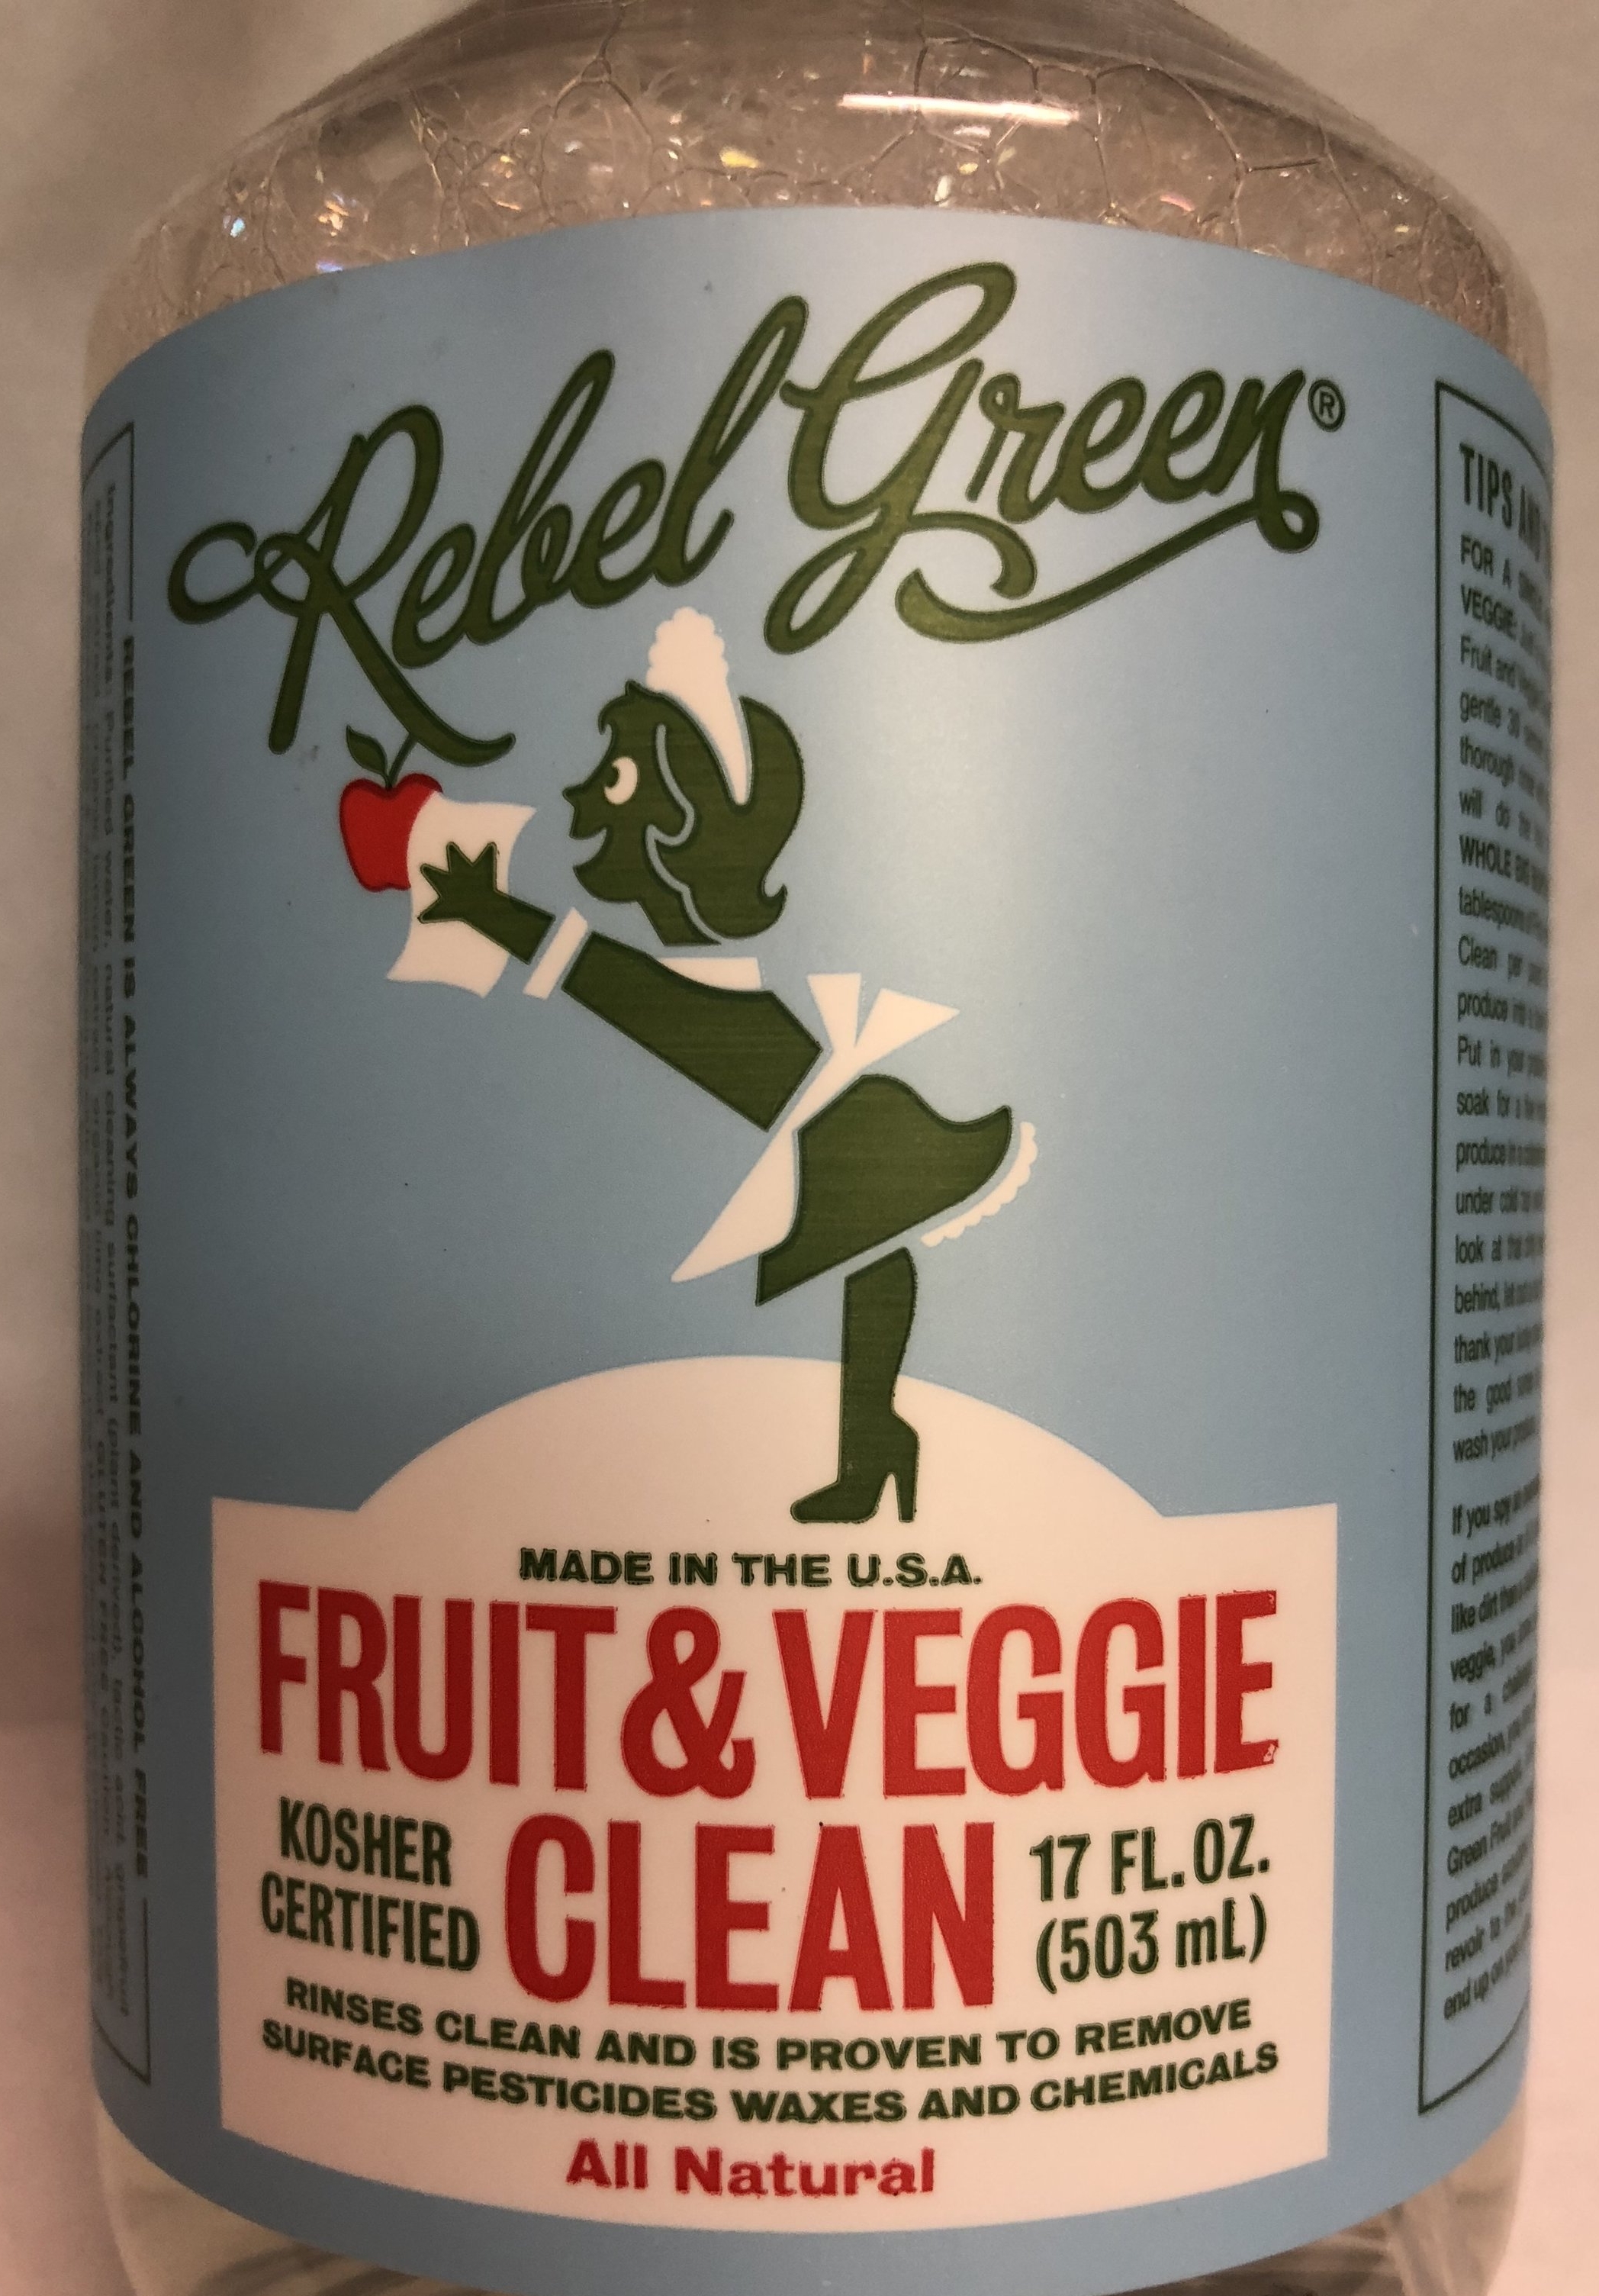 Rebel Green Veggie Clean